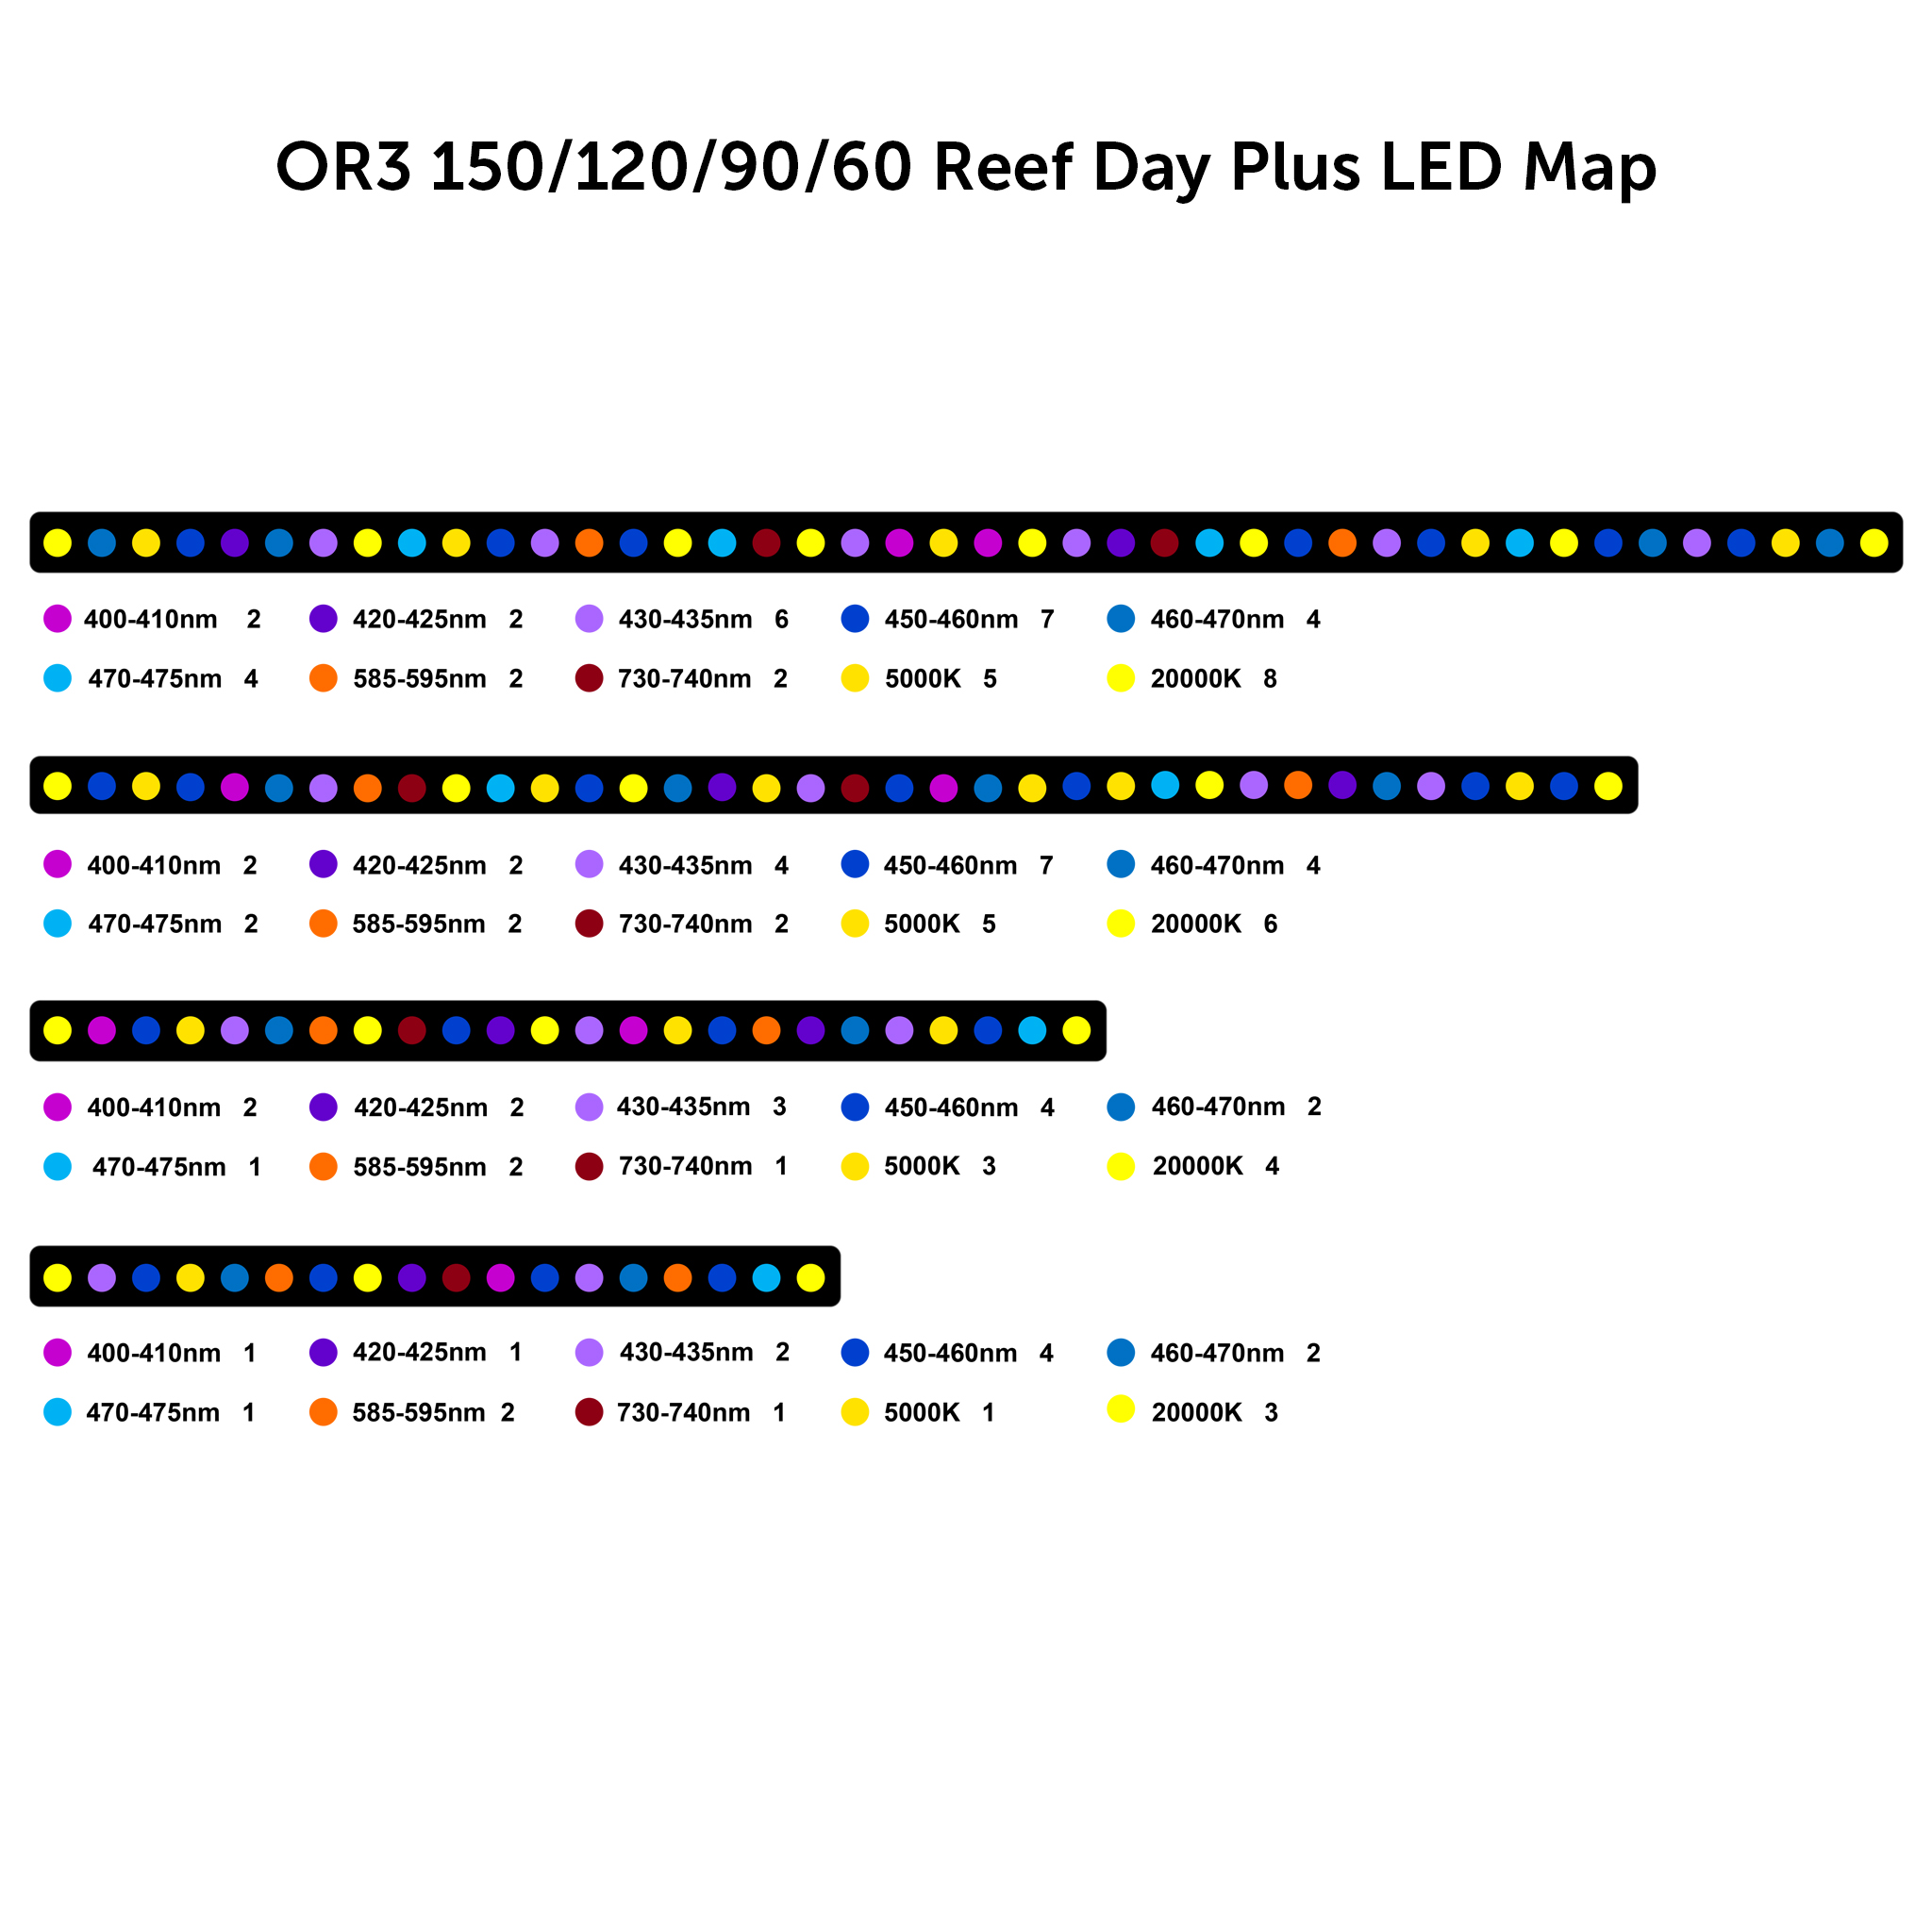 ou3-reef-day-plus-led-map